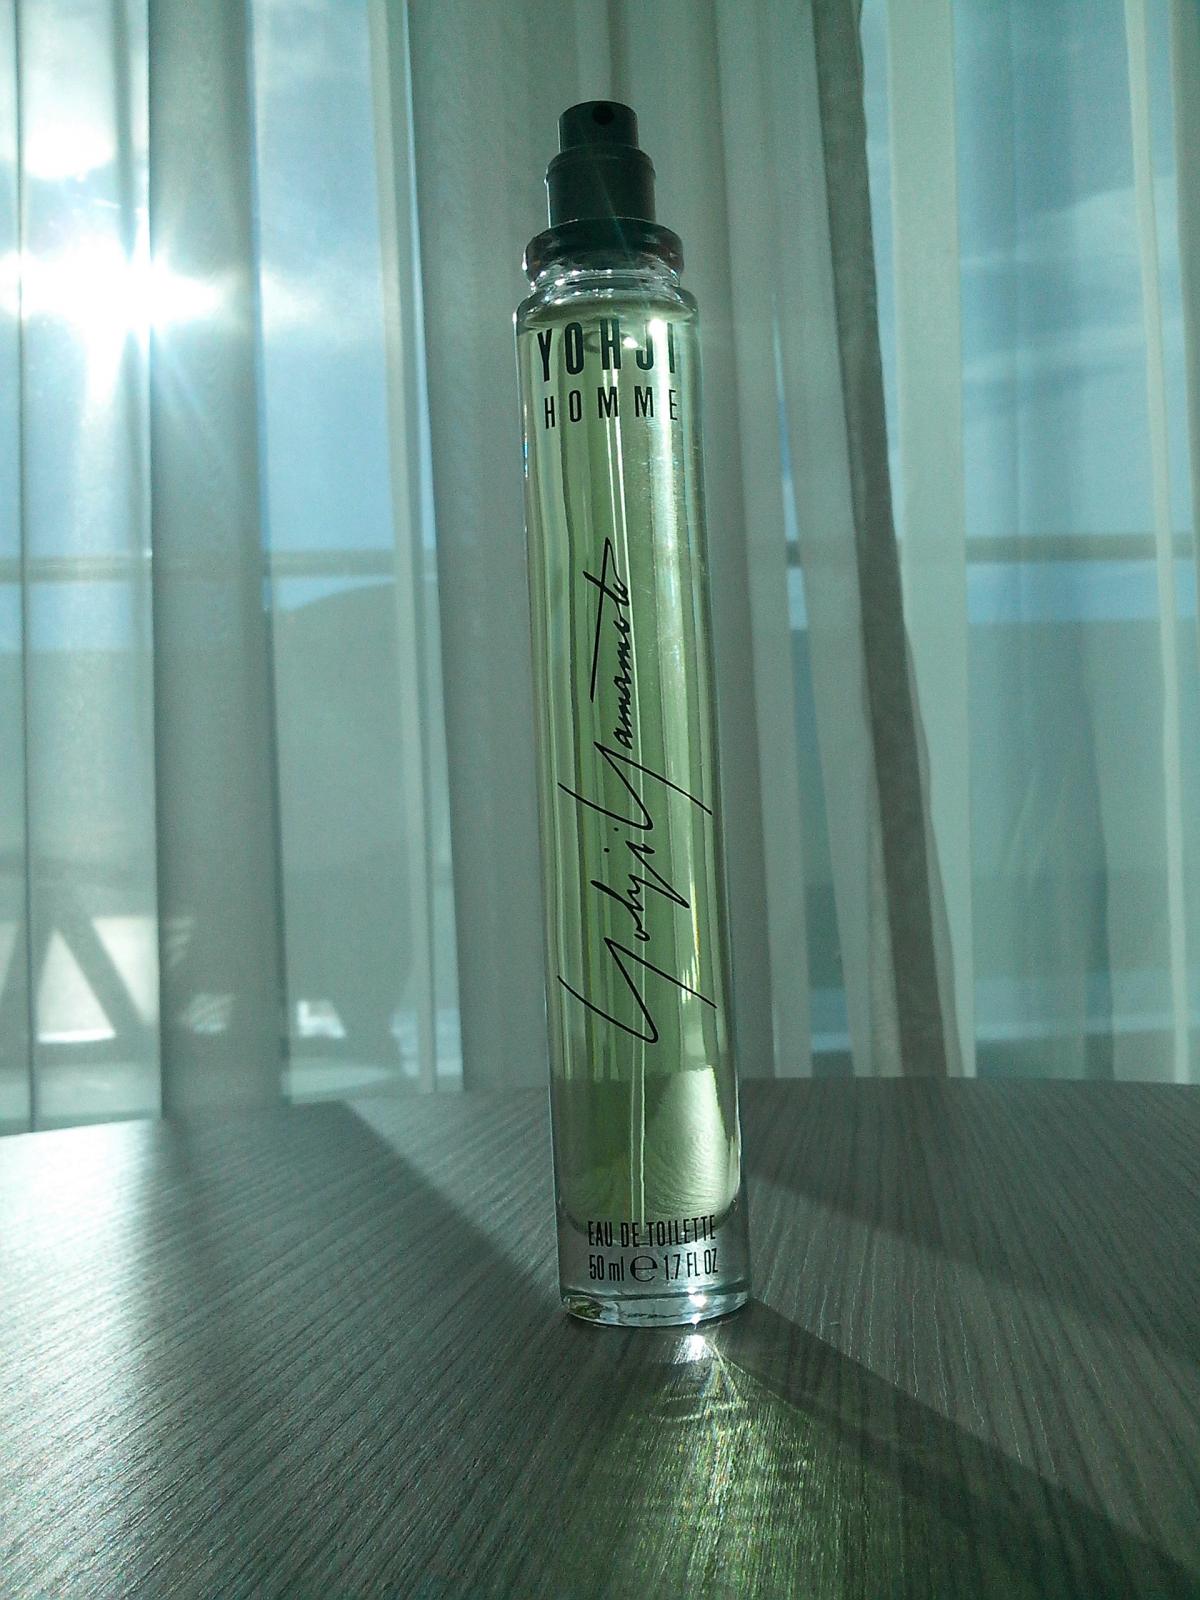 Yohji Homme Yohji Yamamoto cologne - a fragrance for men 2013